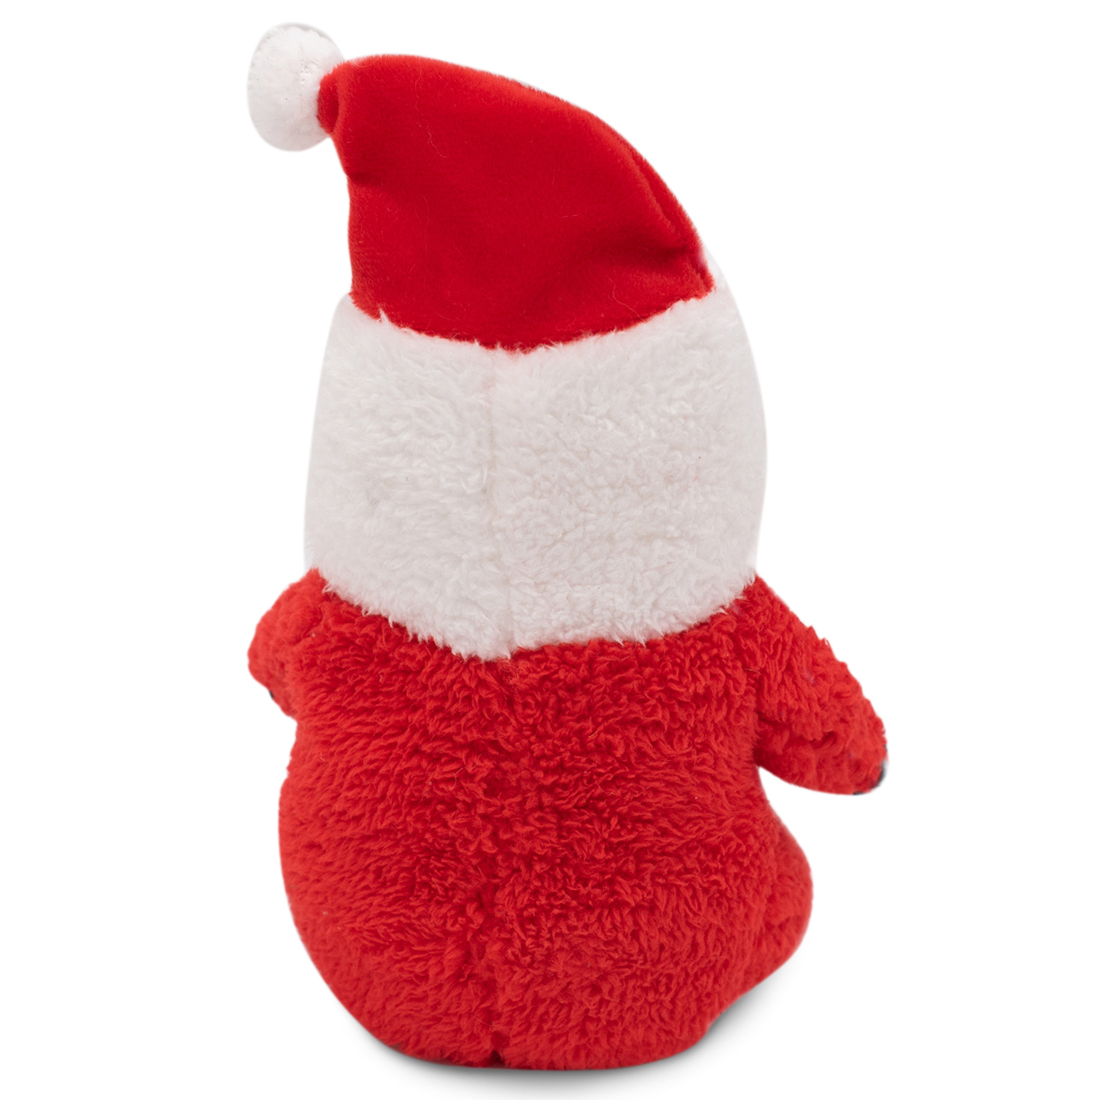 Zippy Paws Plush Squeaker Dog Toy - Christmas Holiday Cheeky Chumz - Santa image 0